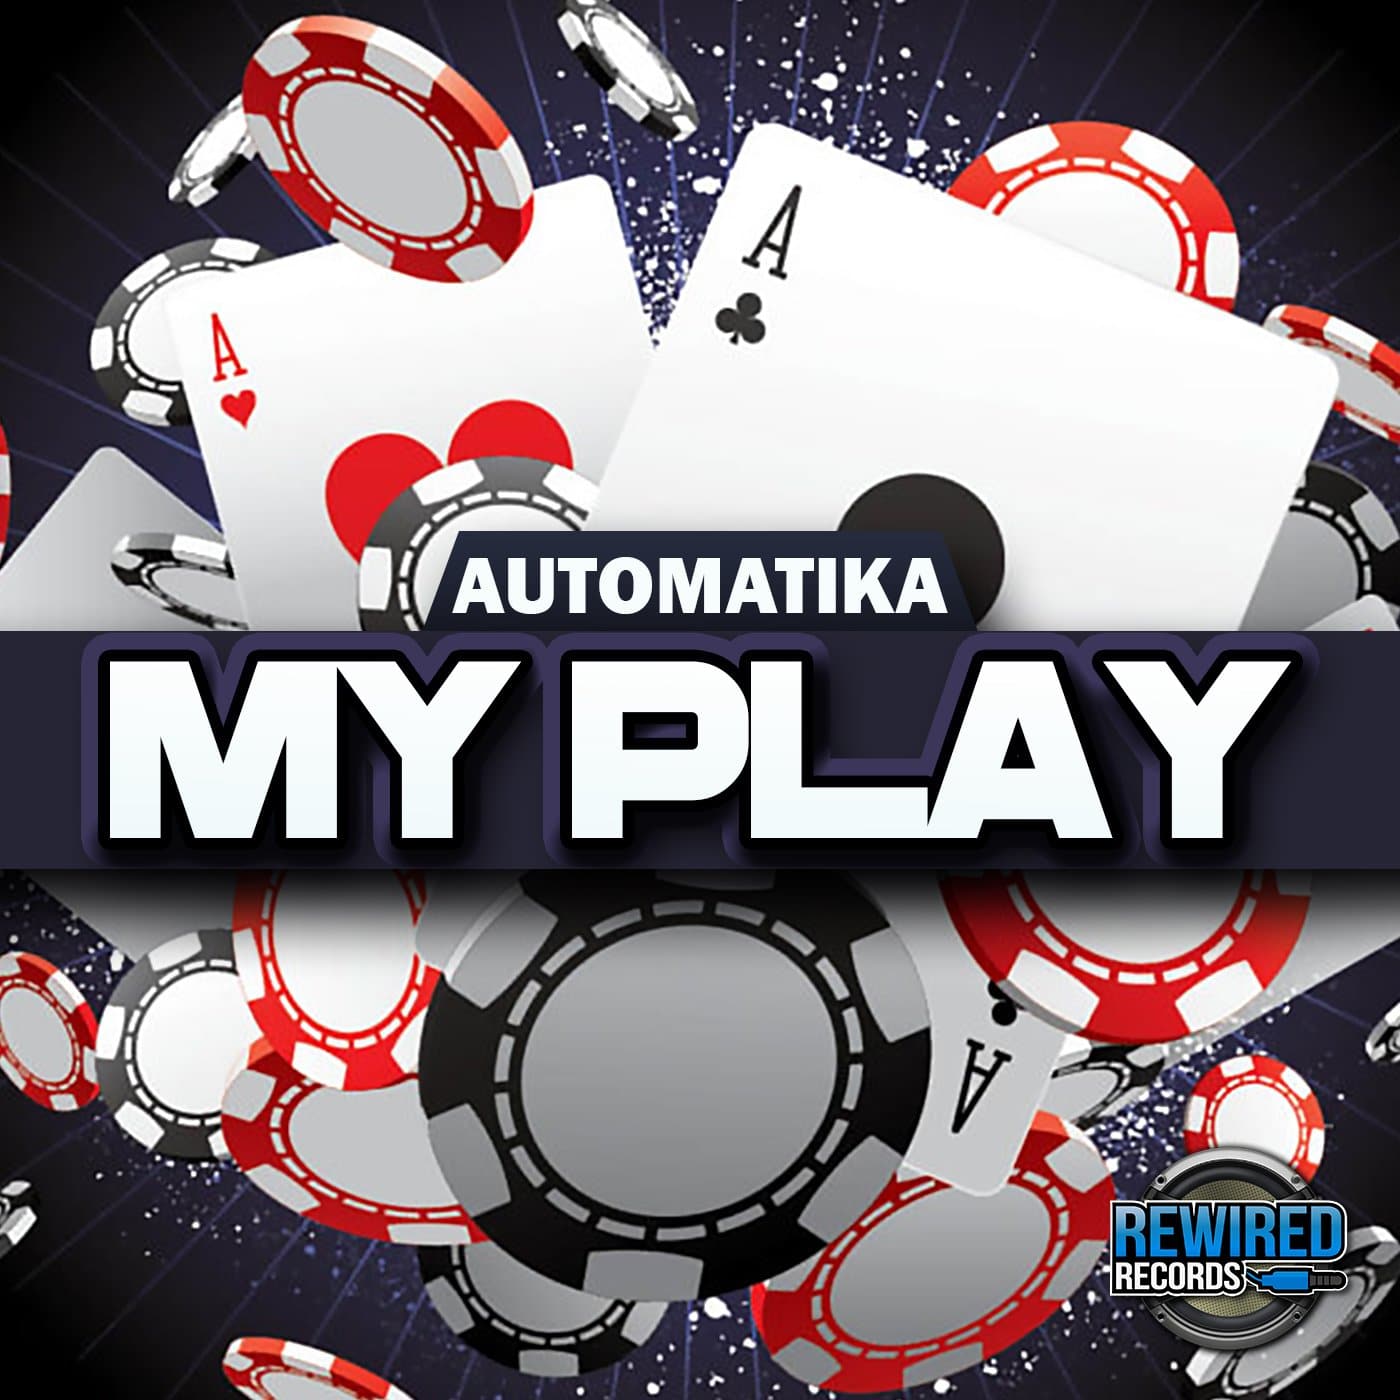 Automatika - My Play - Rewired Records